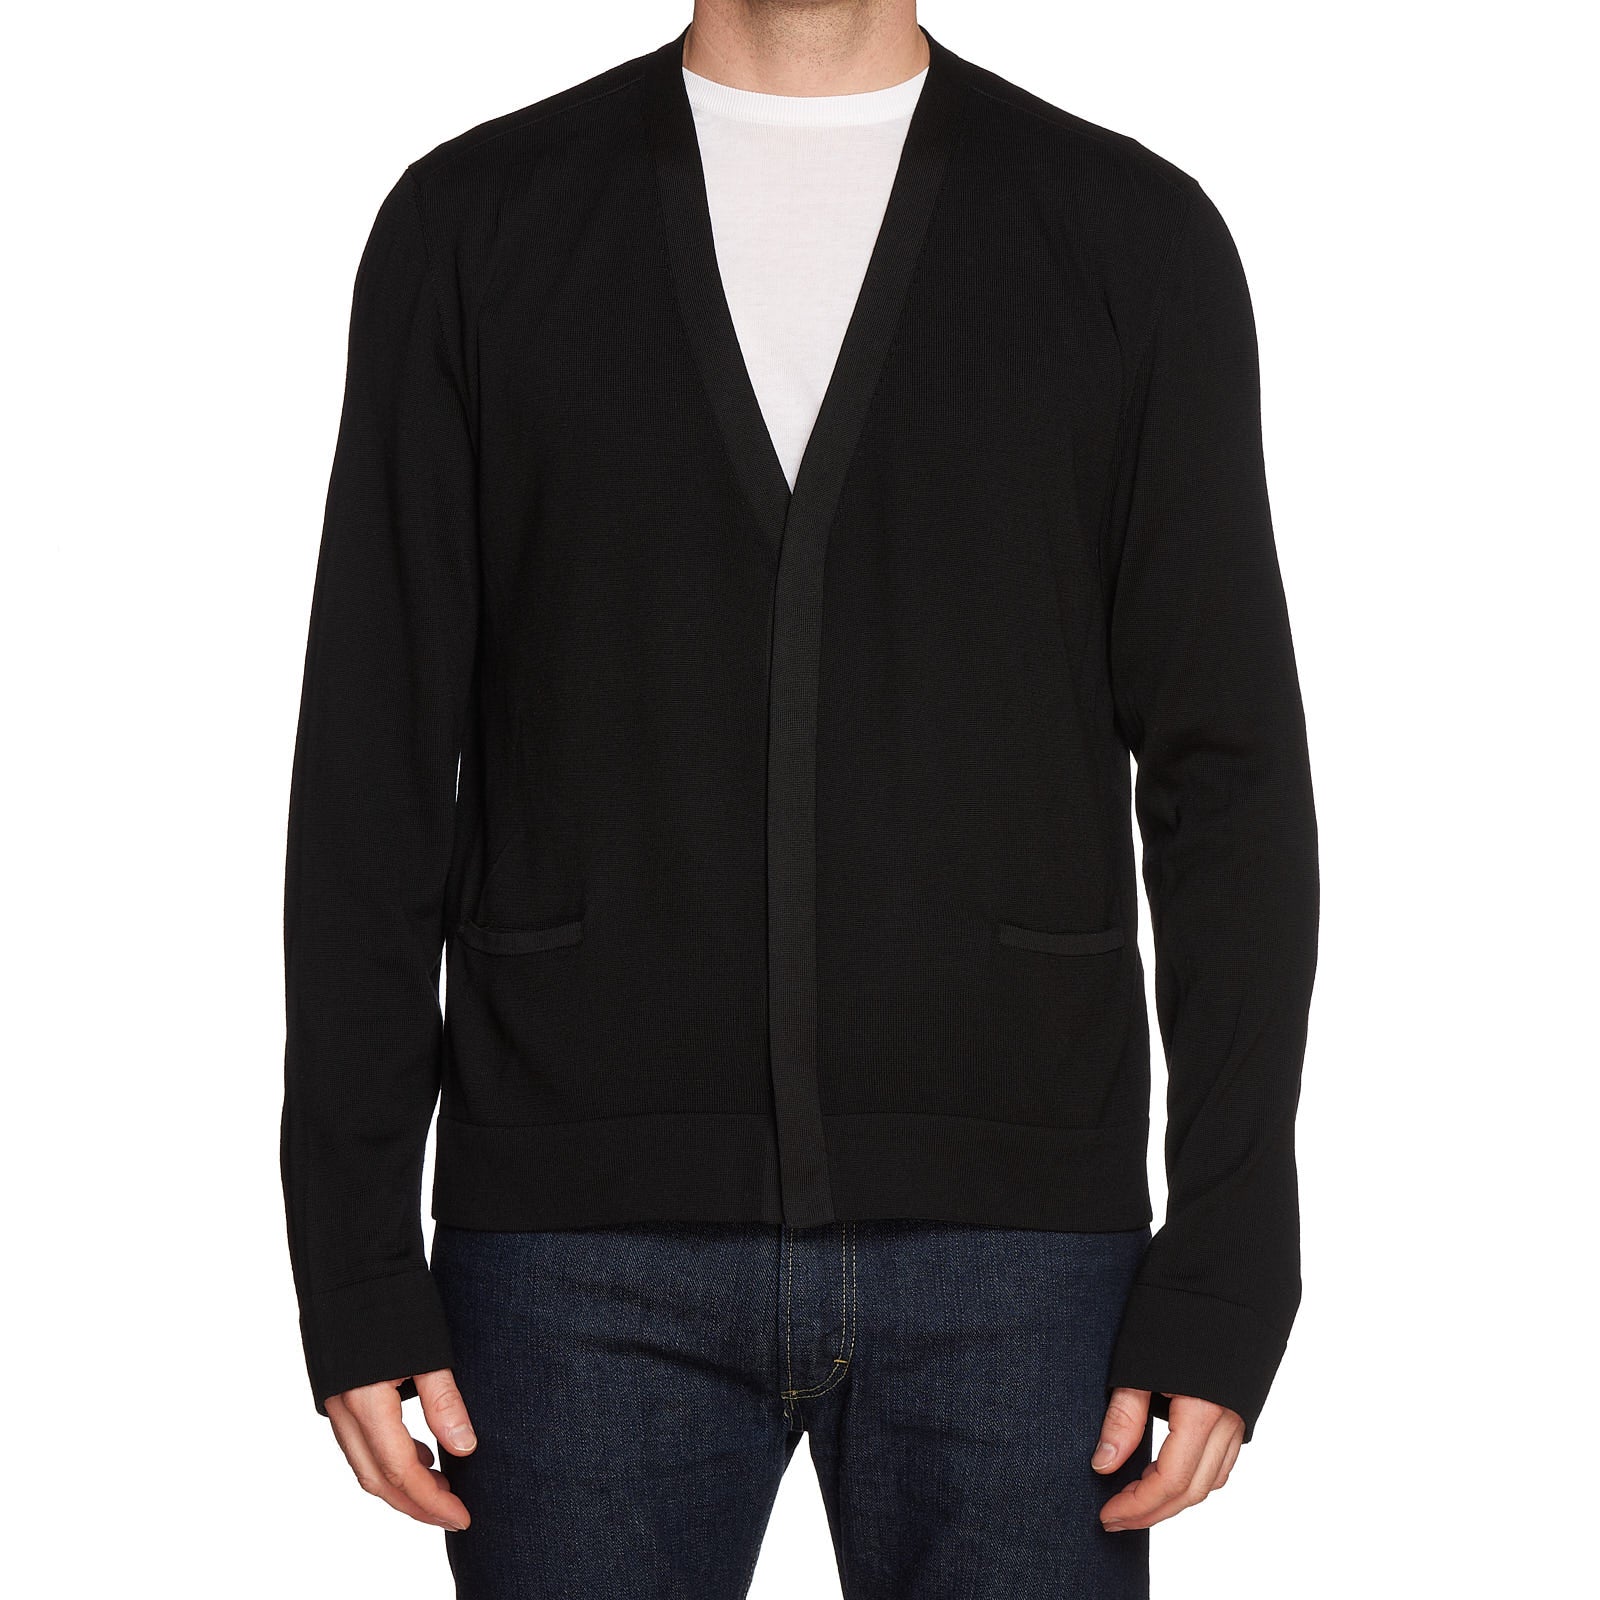 BERLUTI Paris Black Wool Knit Cardigan Sweater with Mulberry Silk Details NEW Size M BERLUTI